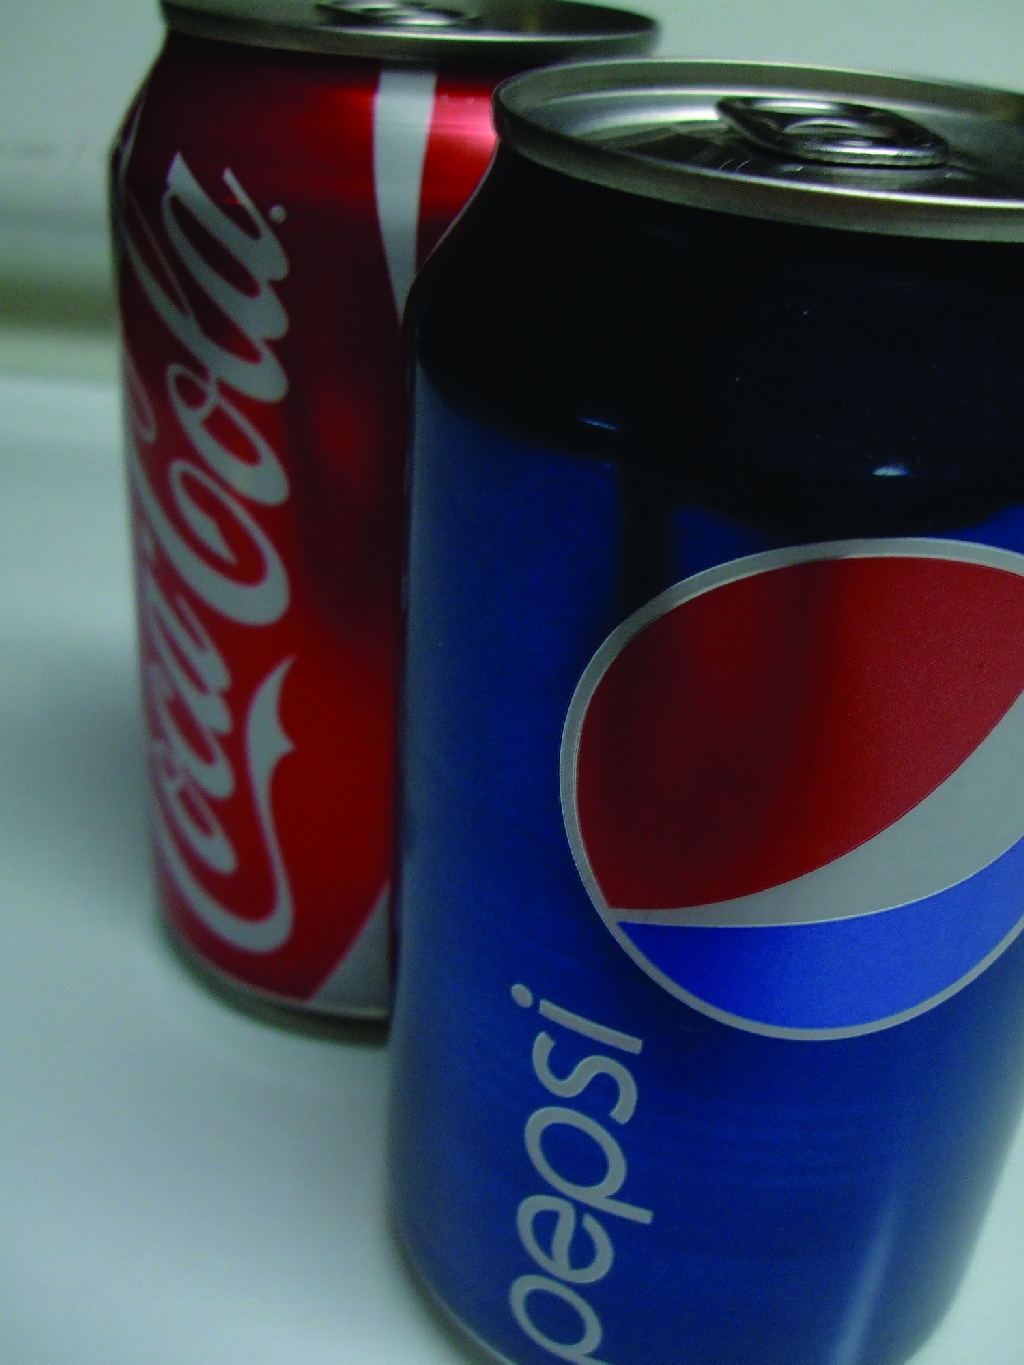 coca cola 2011 balance sheet